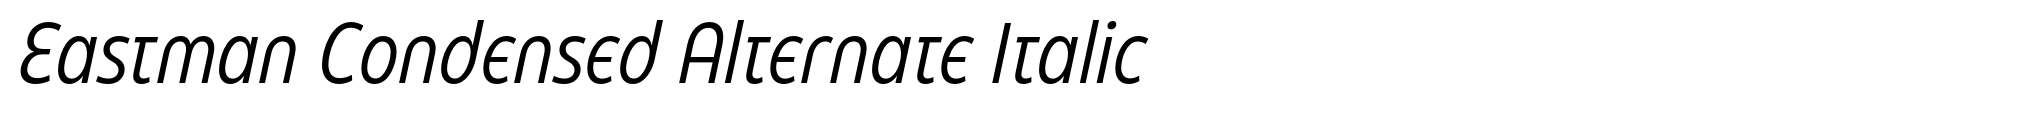 Eastman Condensed Alternate Italic image